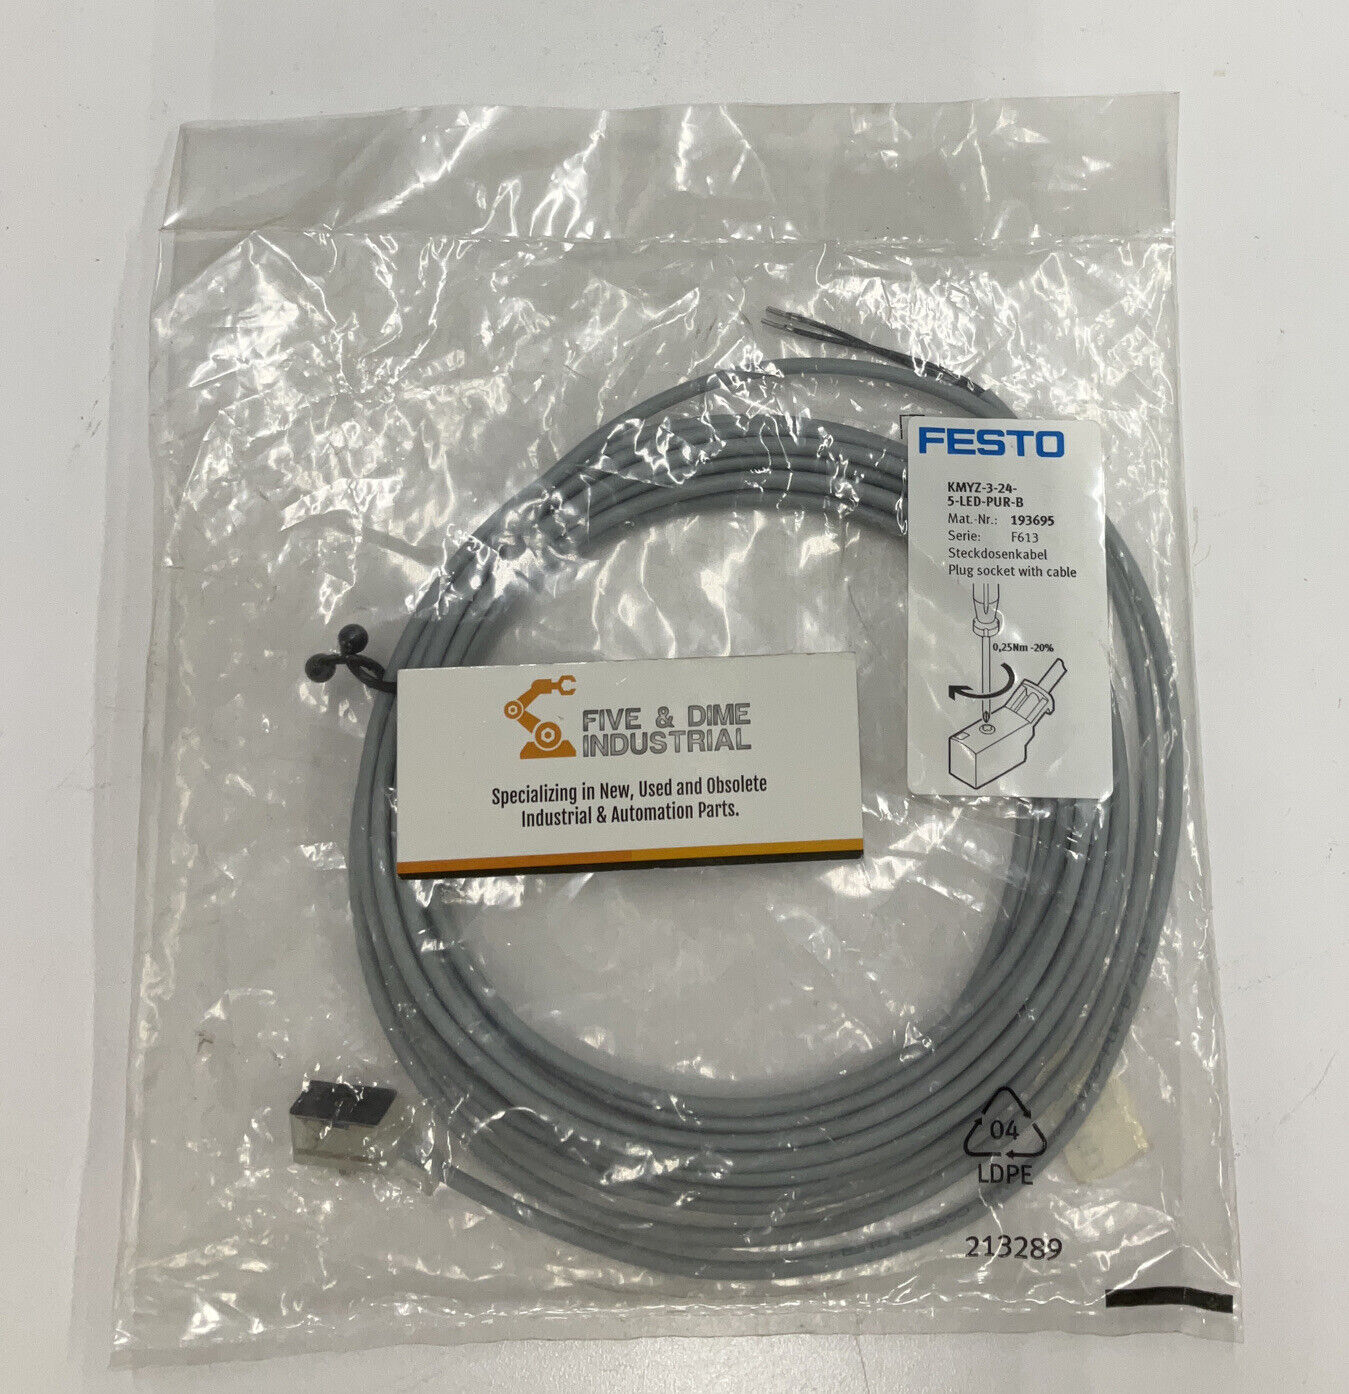 Festo KMYZ-3-24-5-LED-PUR-B Plug Socket w/ Cable 193695 (BL176)